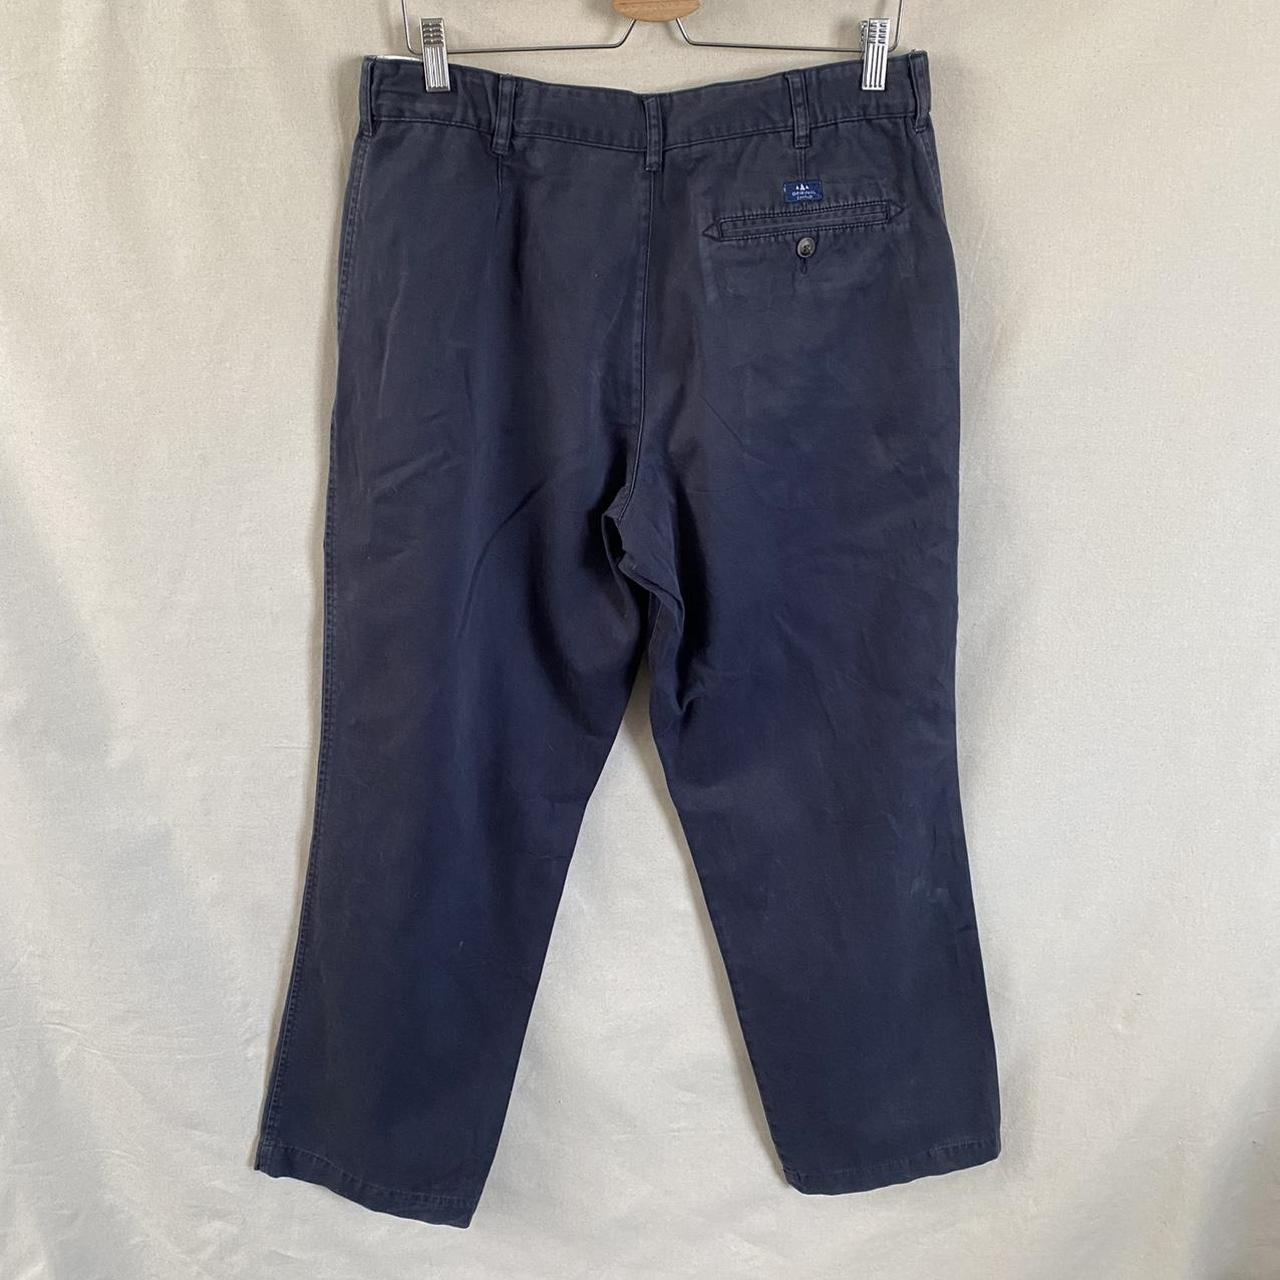 Atlantic Bay Blue Trousers Chinos#N##N#- 2 pockets with... - Depop